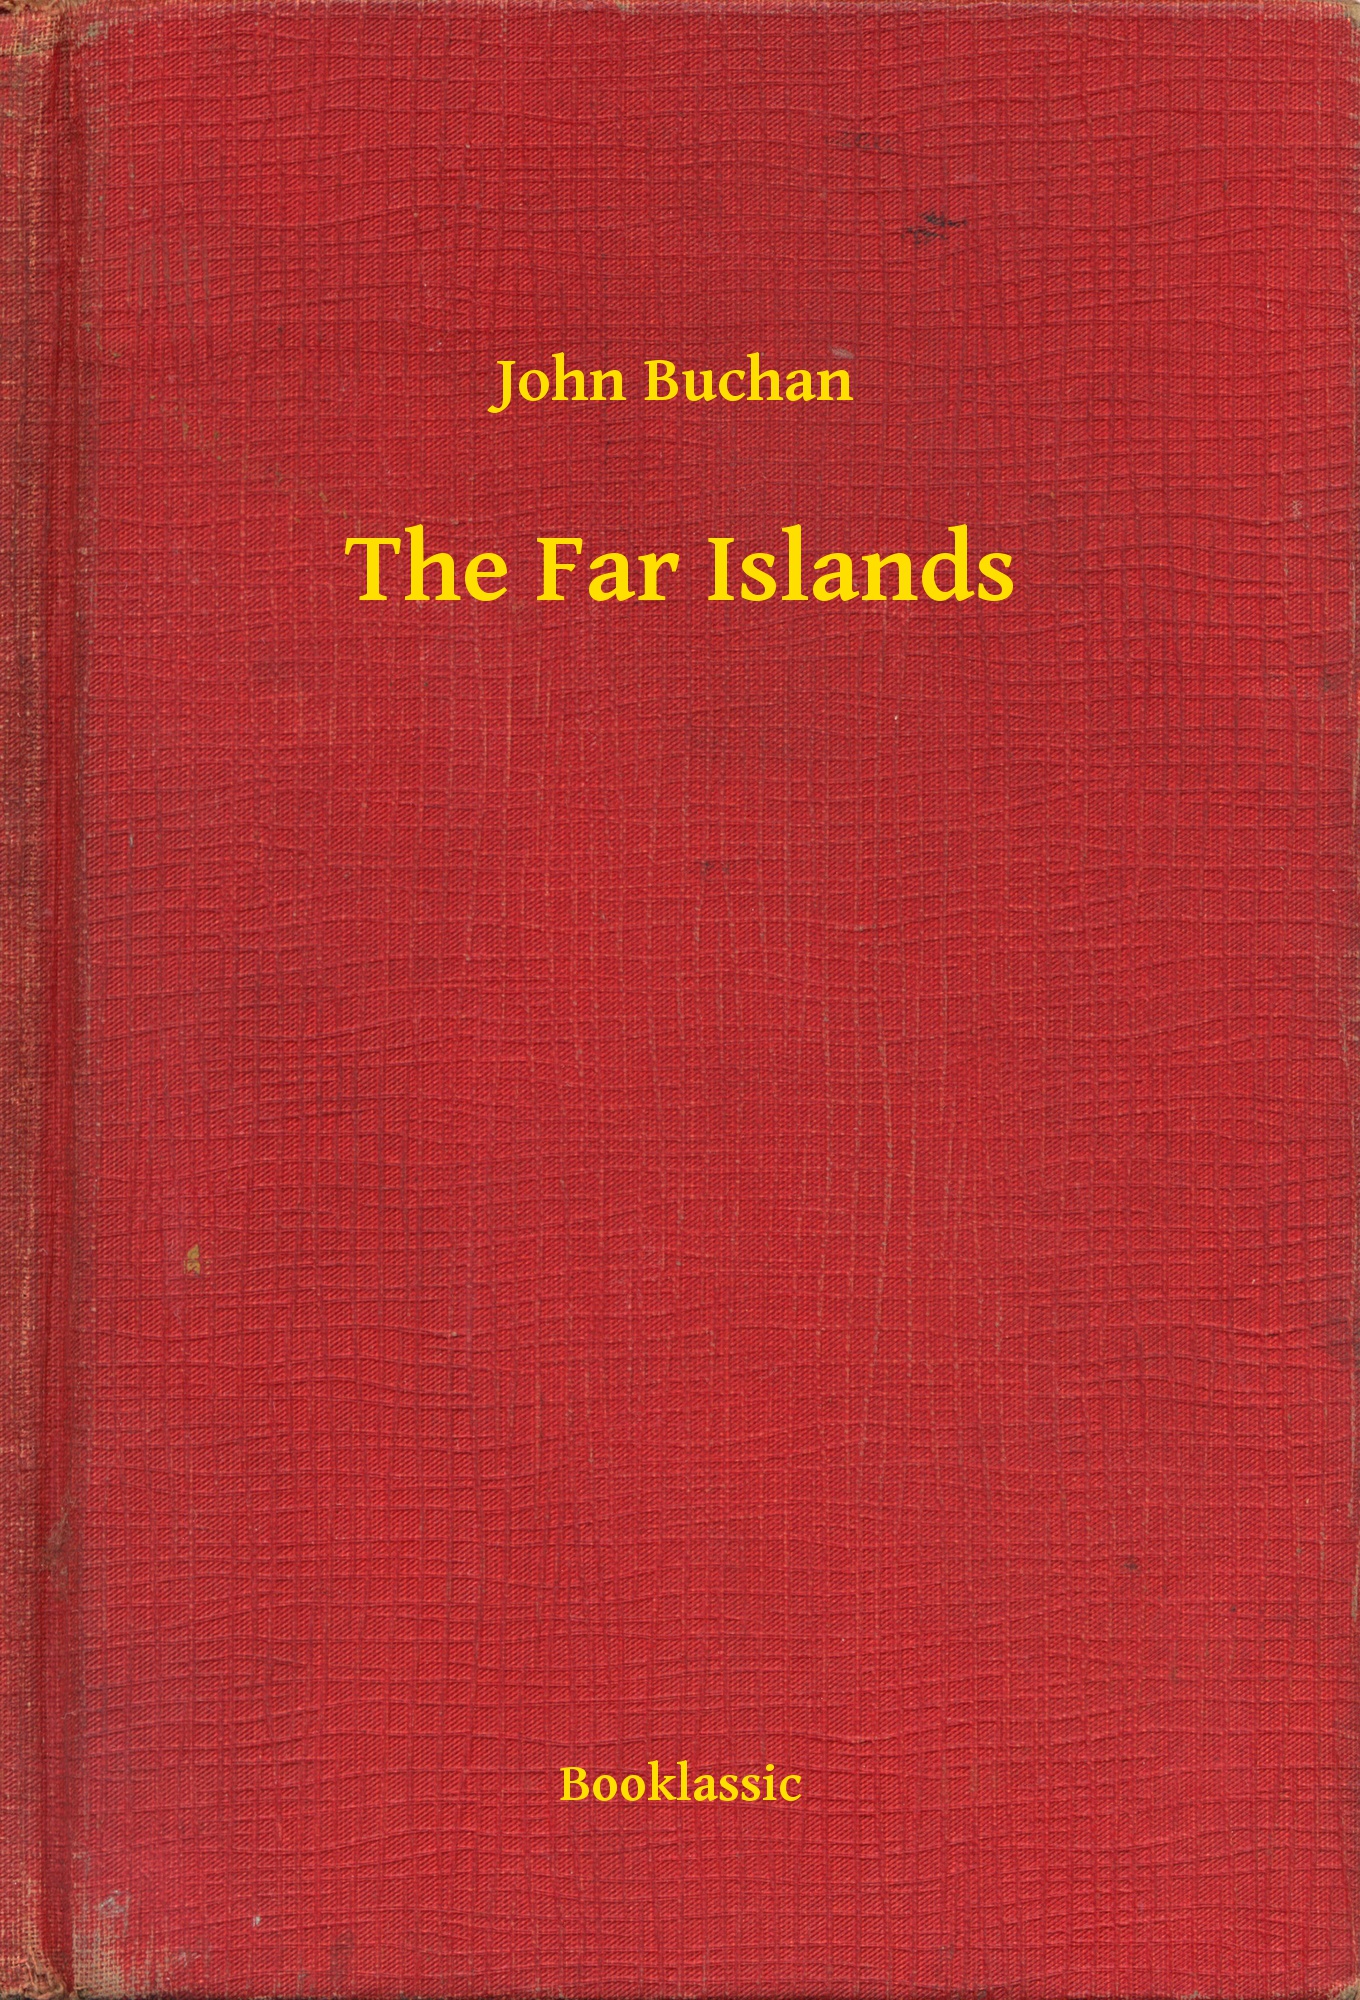 The Far Islands